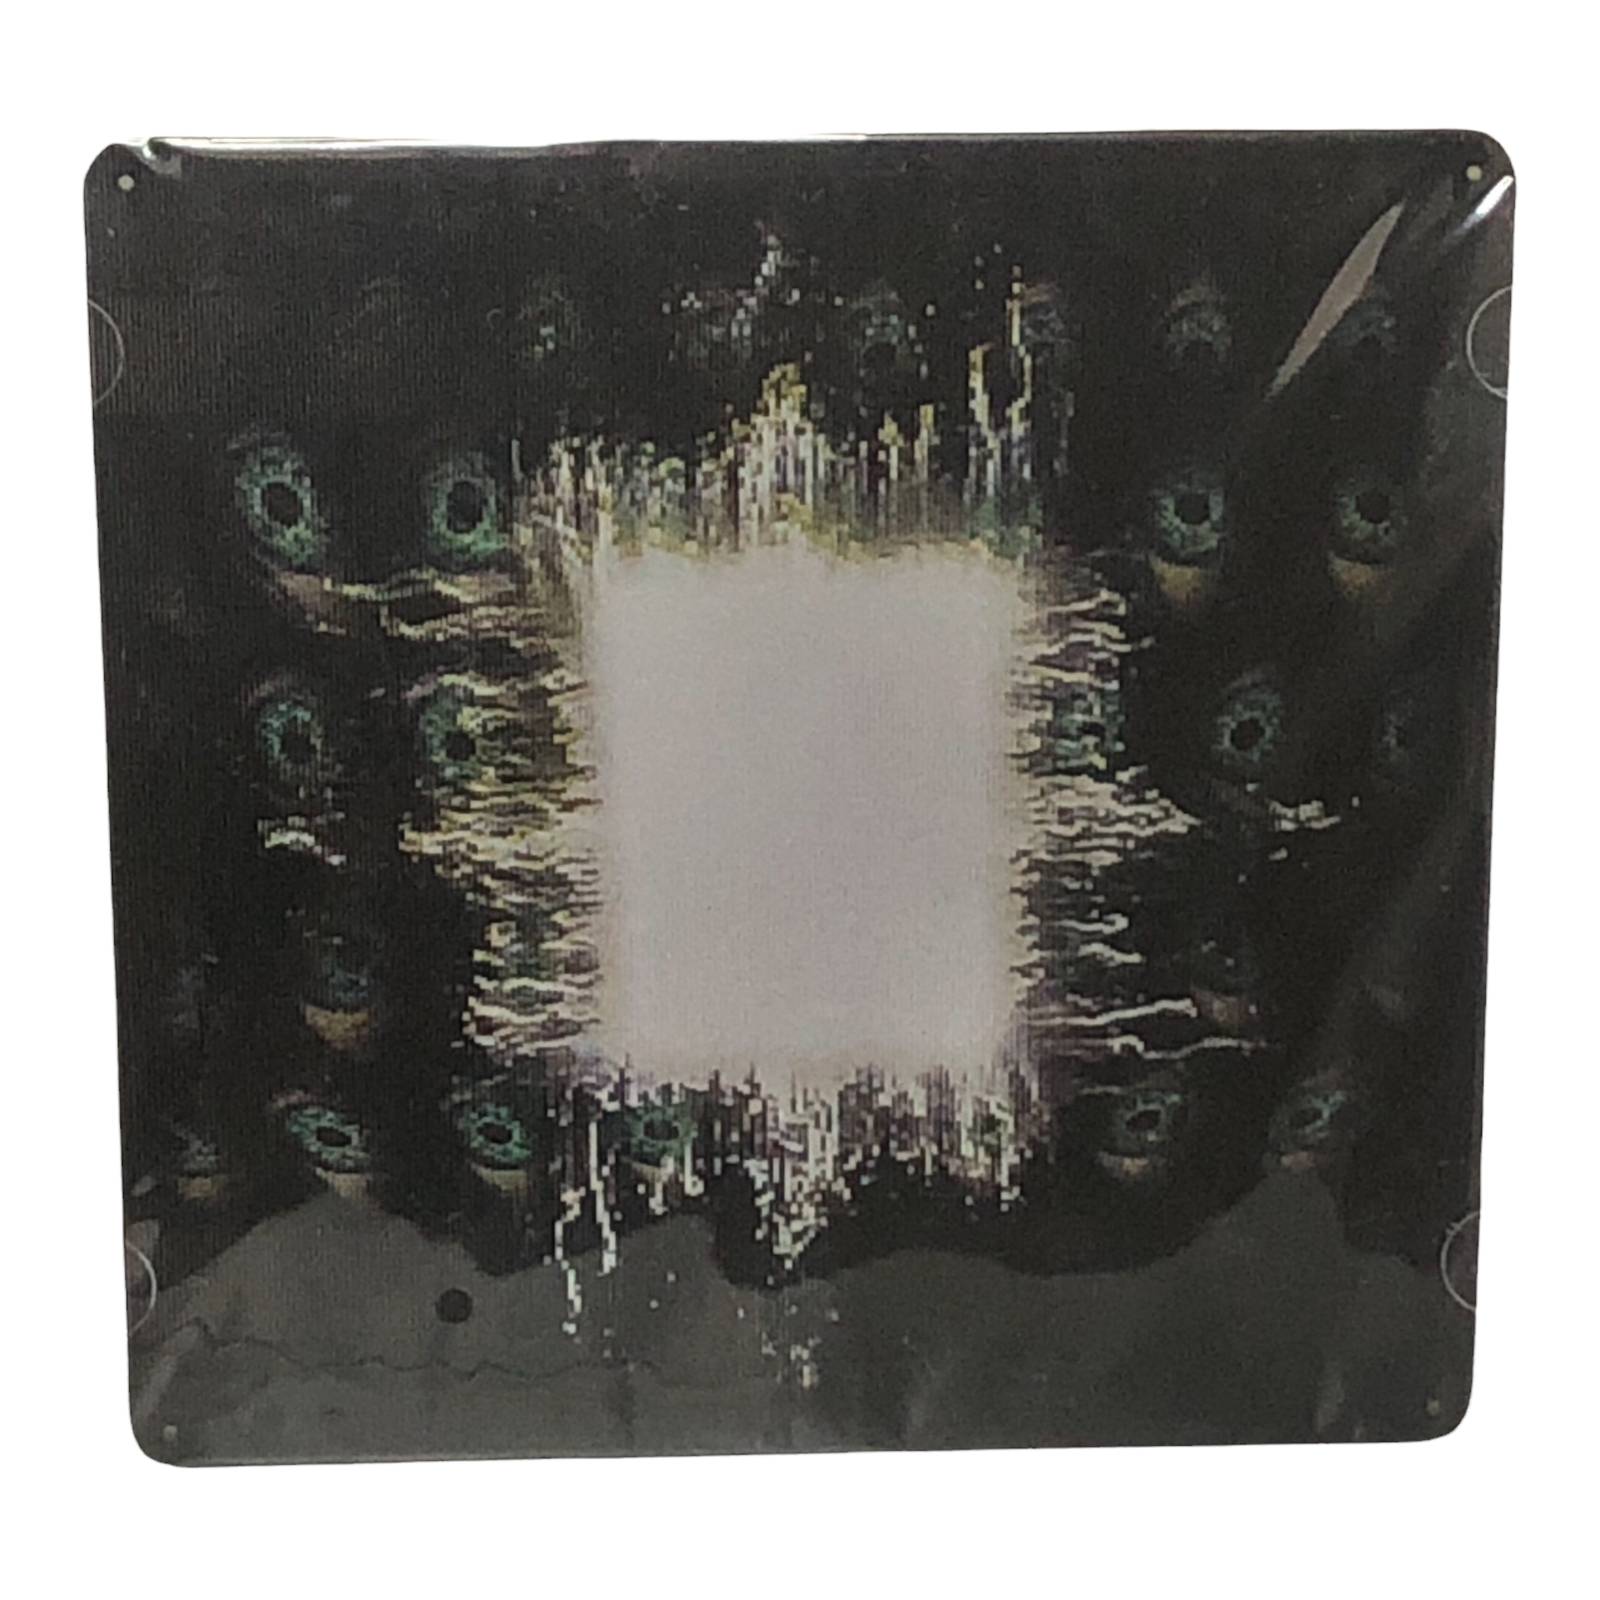 Tool - Aenima Album Cover Metal Print Tin Sign 12x 12 – MadCatterAZ